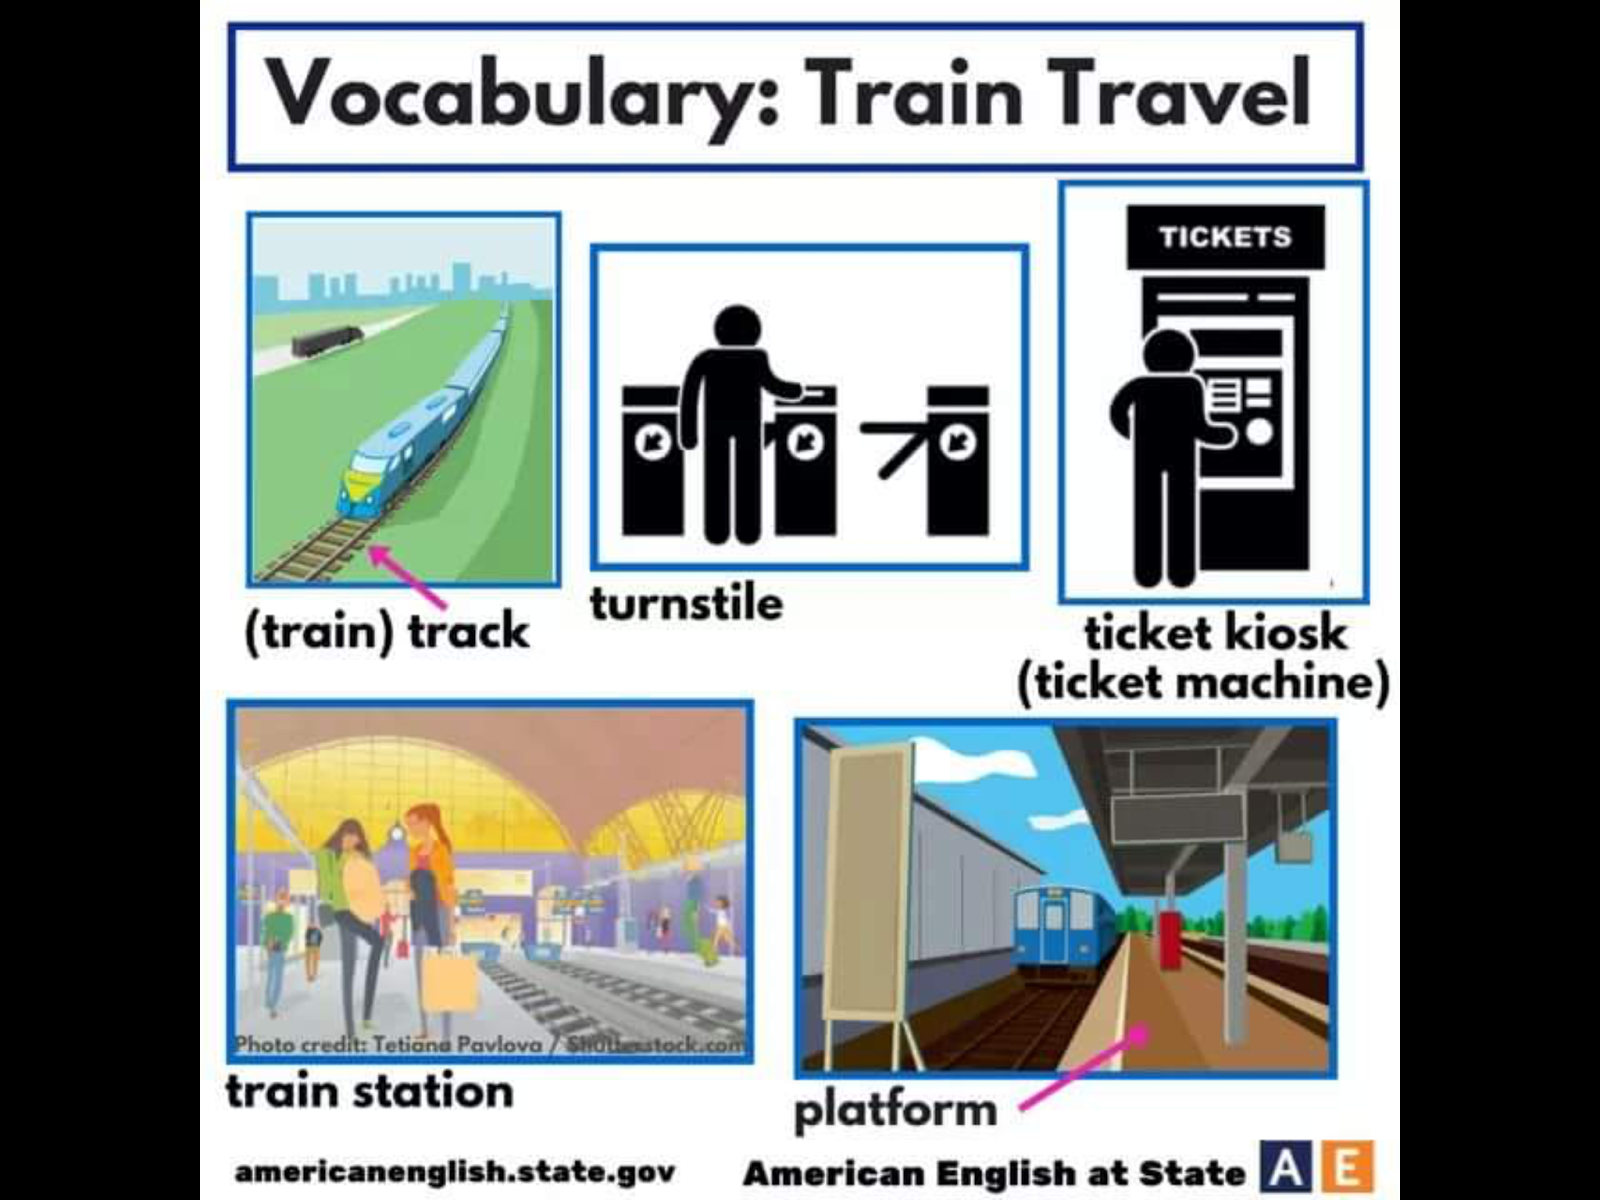 He going. Train Vocabulary. Train Travel Vocabulary. Train на английском. Travelling Vocabulary.